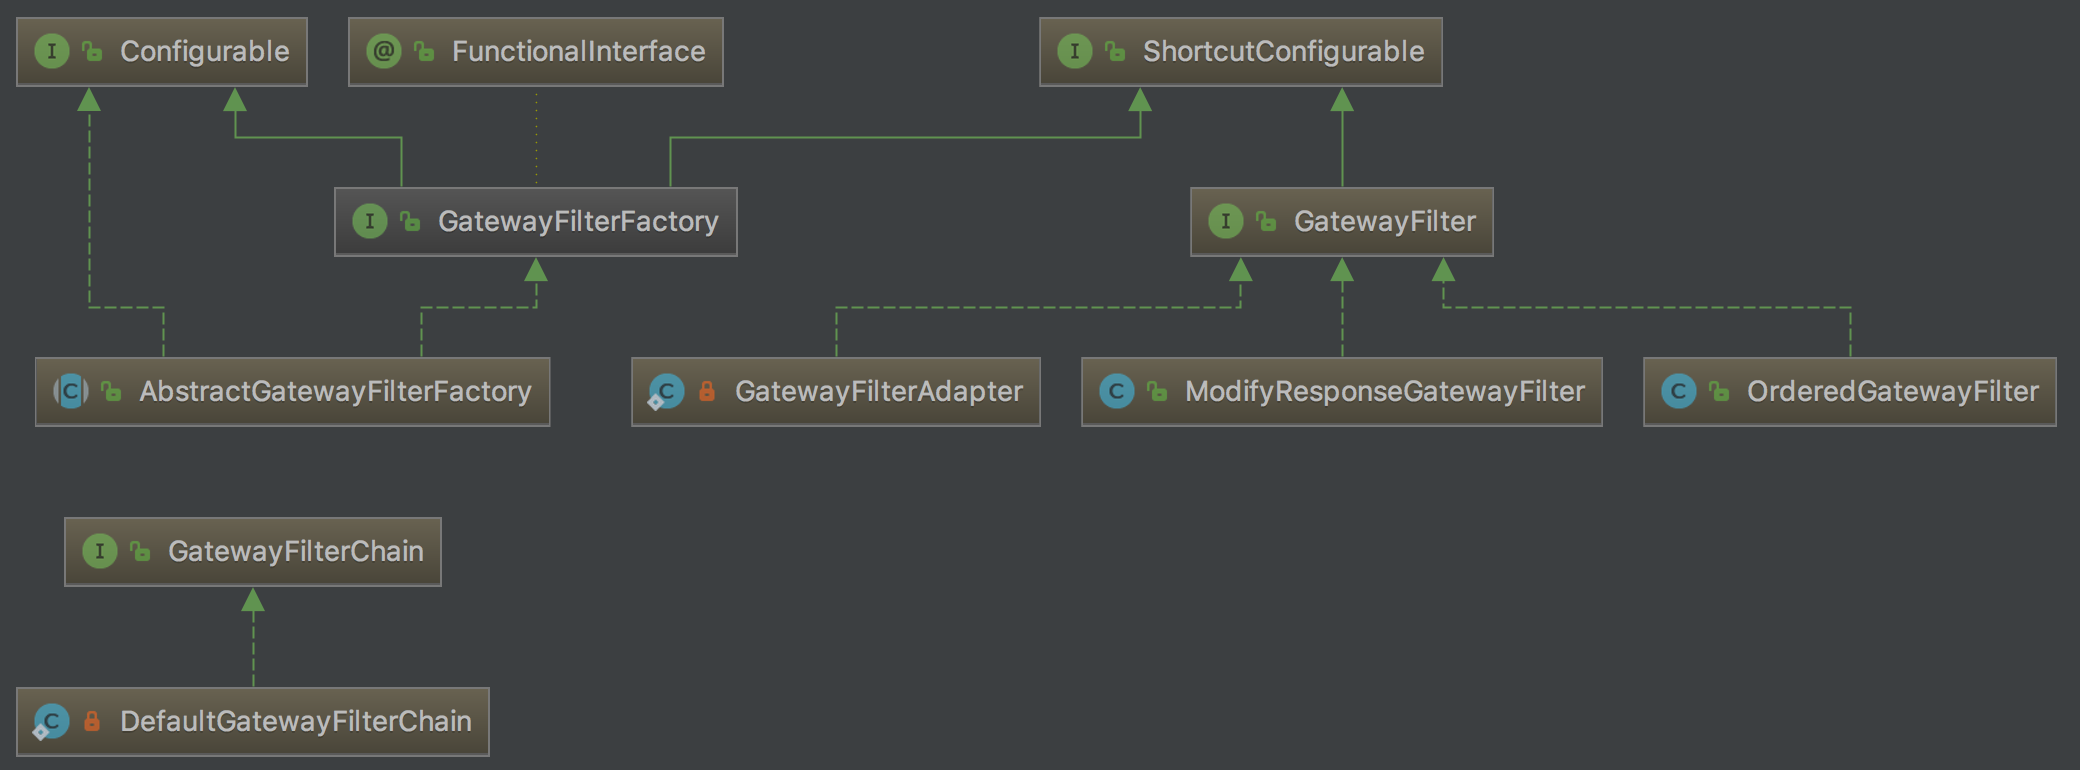 spring cloud gateway-GatewayFilter、GlobalFilter、GatewayFilterChain、GatewayFilterFactory作用及生命周期